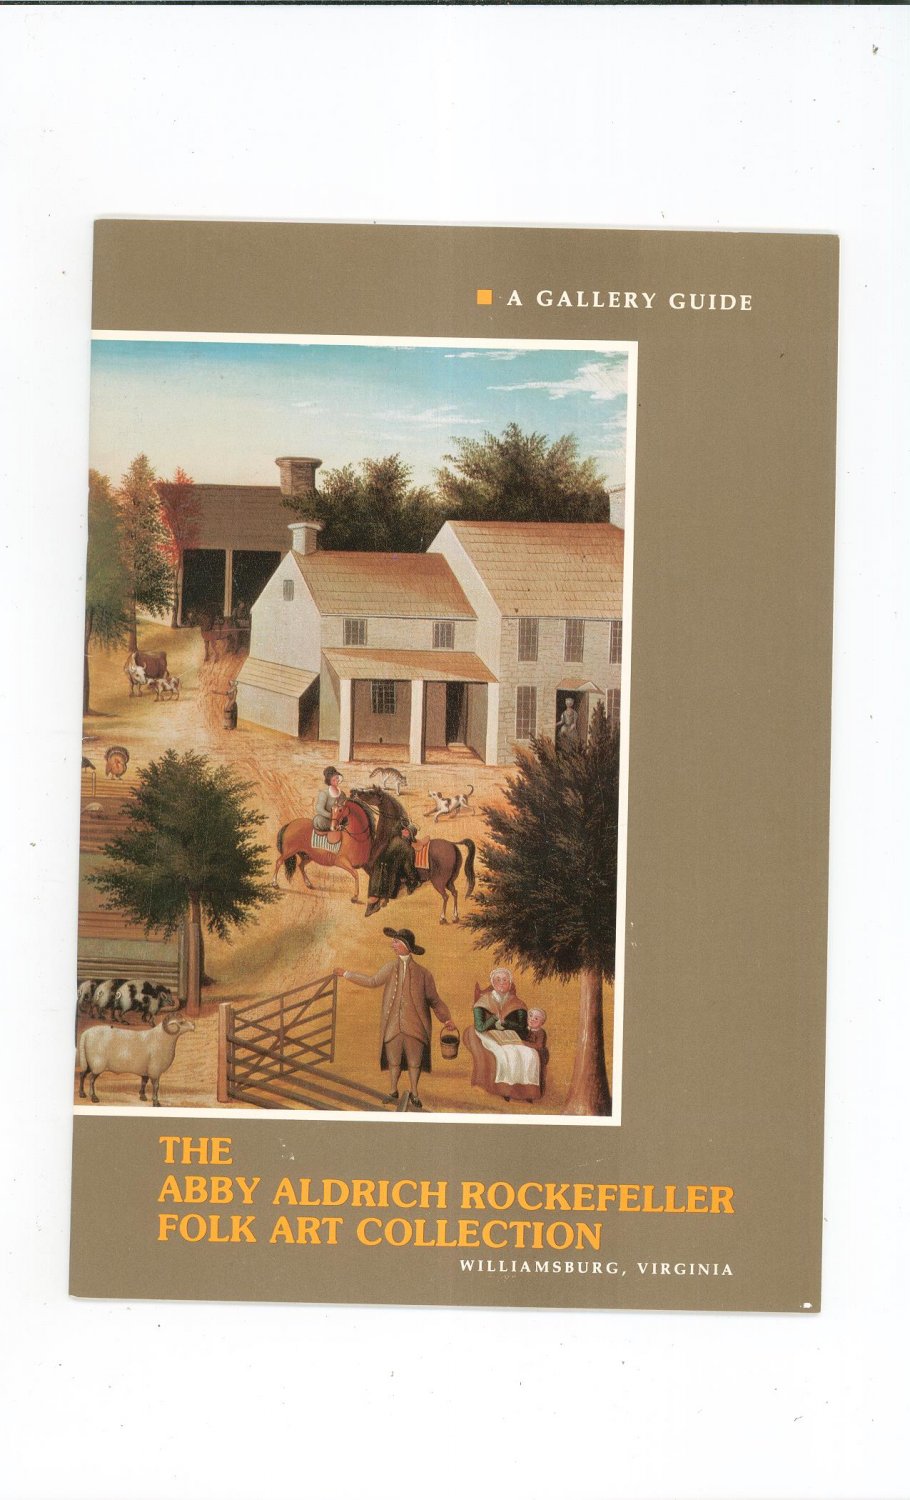 The Abby Aldrich Rockefeller Folk Art Collection Gallery